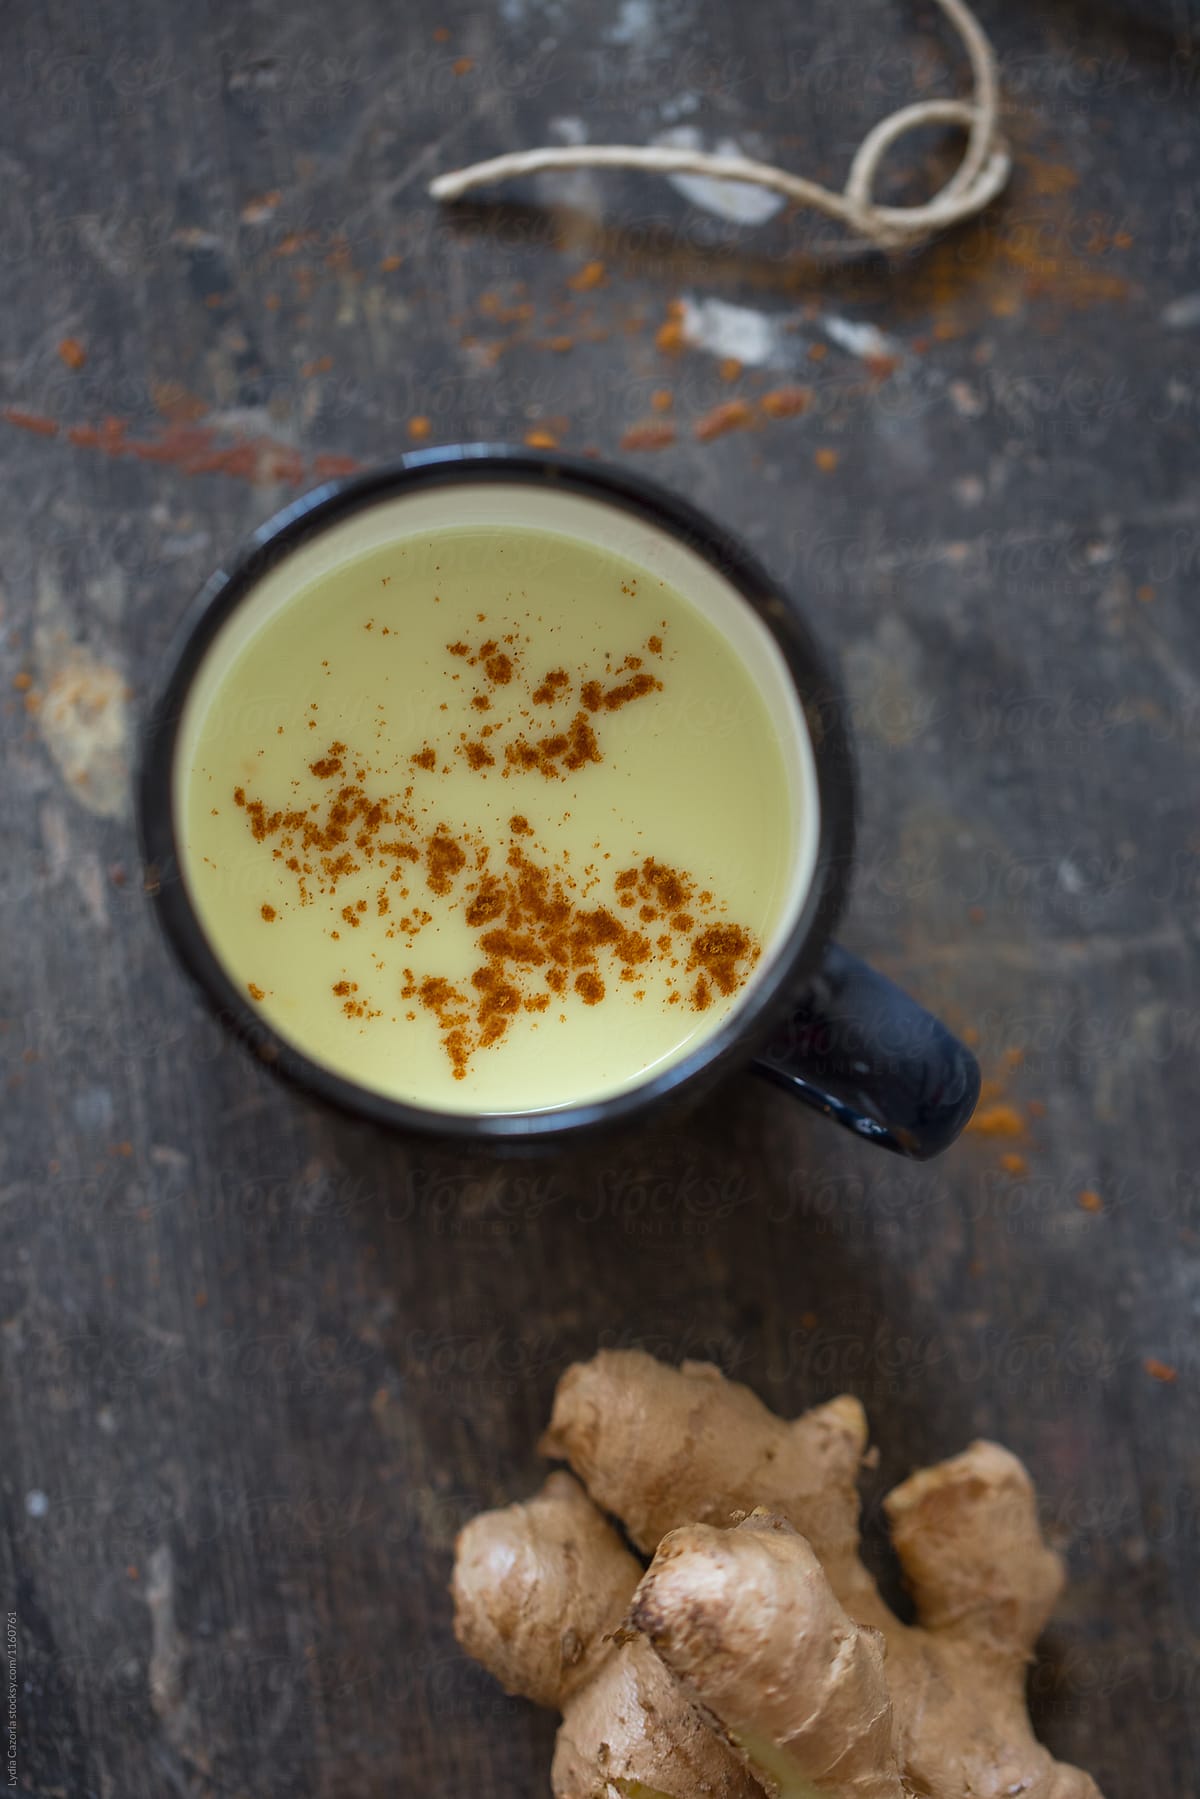 Golden Milk or turmeric latte